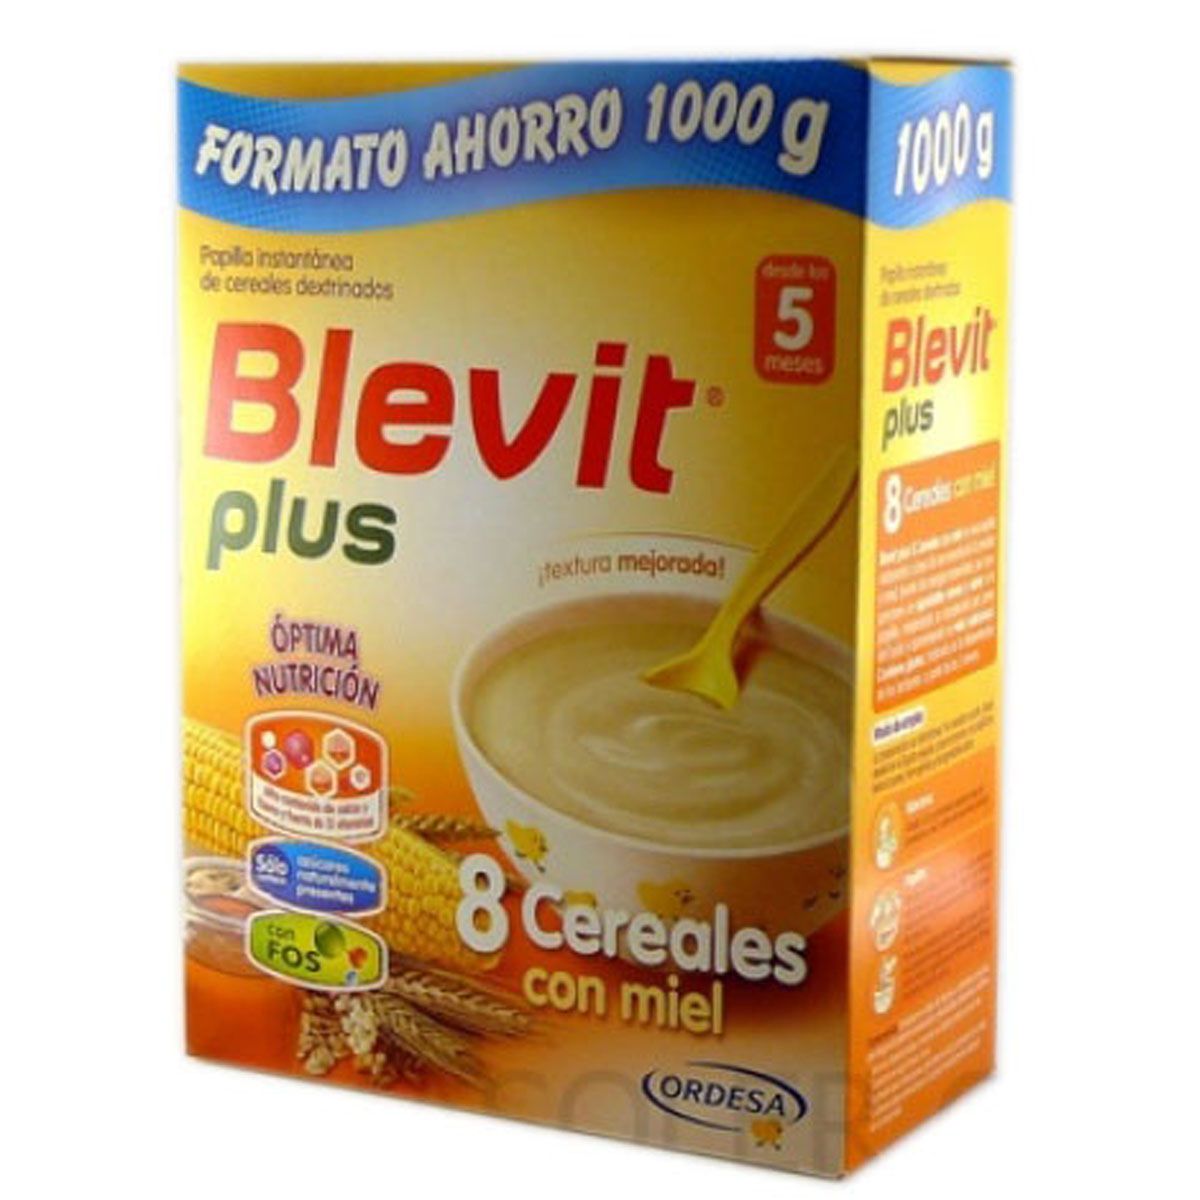 Blevit Plus Bibe 8 Cereales 600g+150g